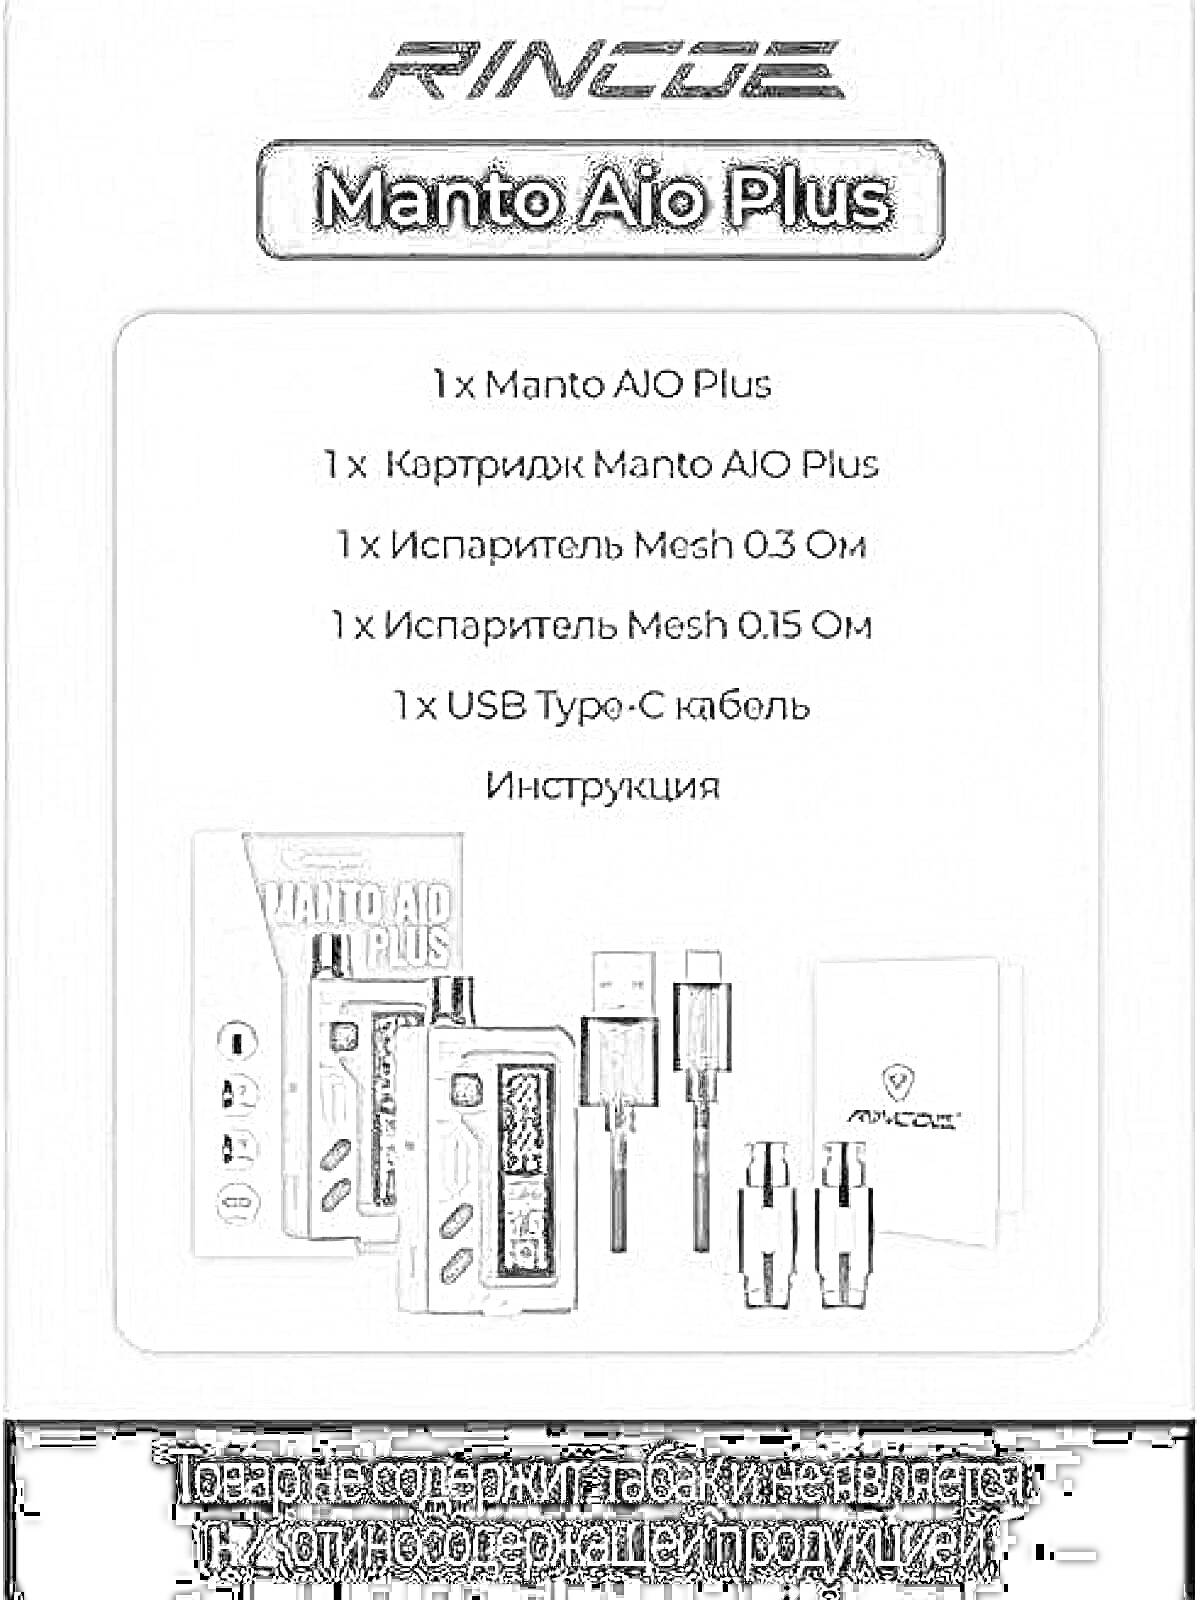 Раскраска Комплект Manto AIO Plus: устройство Manto AIO Plus, картридж Manto AIO Plus, испаритель Mesh 0.3 Ом, испаритель Mesh 0.15 Ом, USB Type-C кабель, инструкция